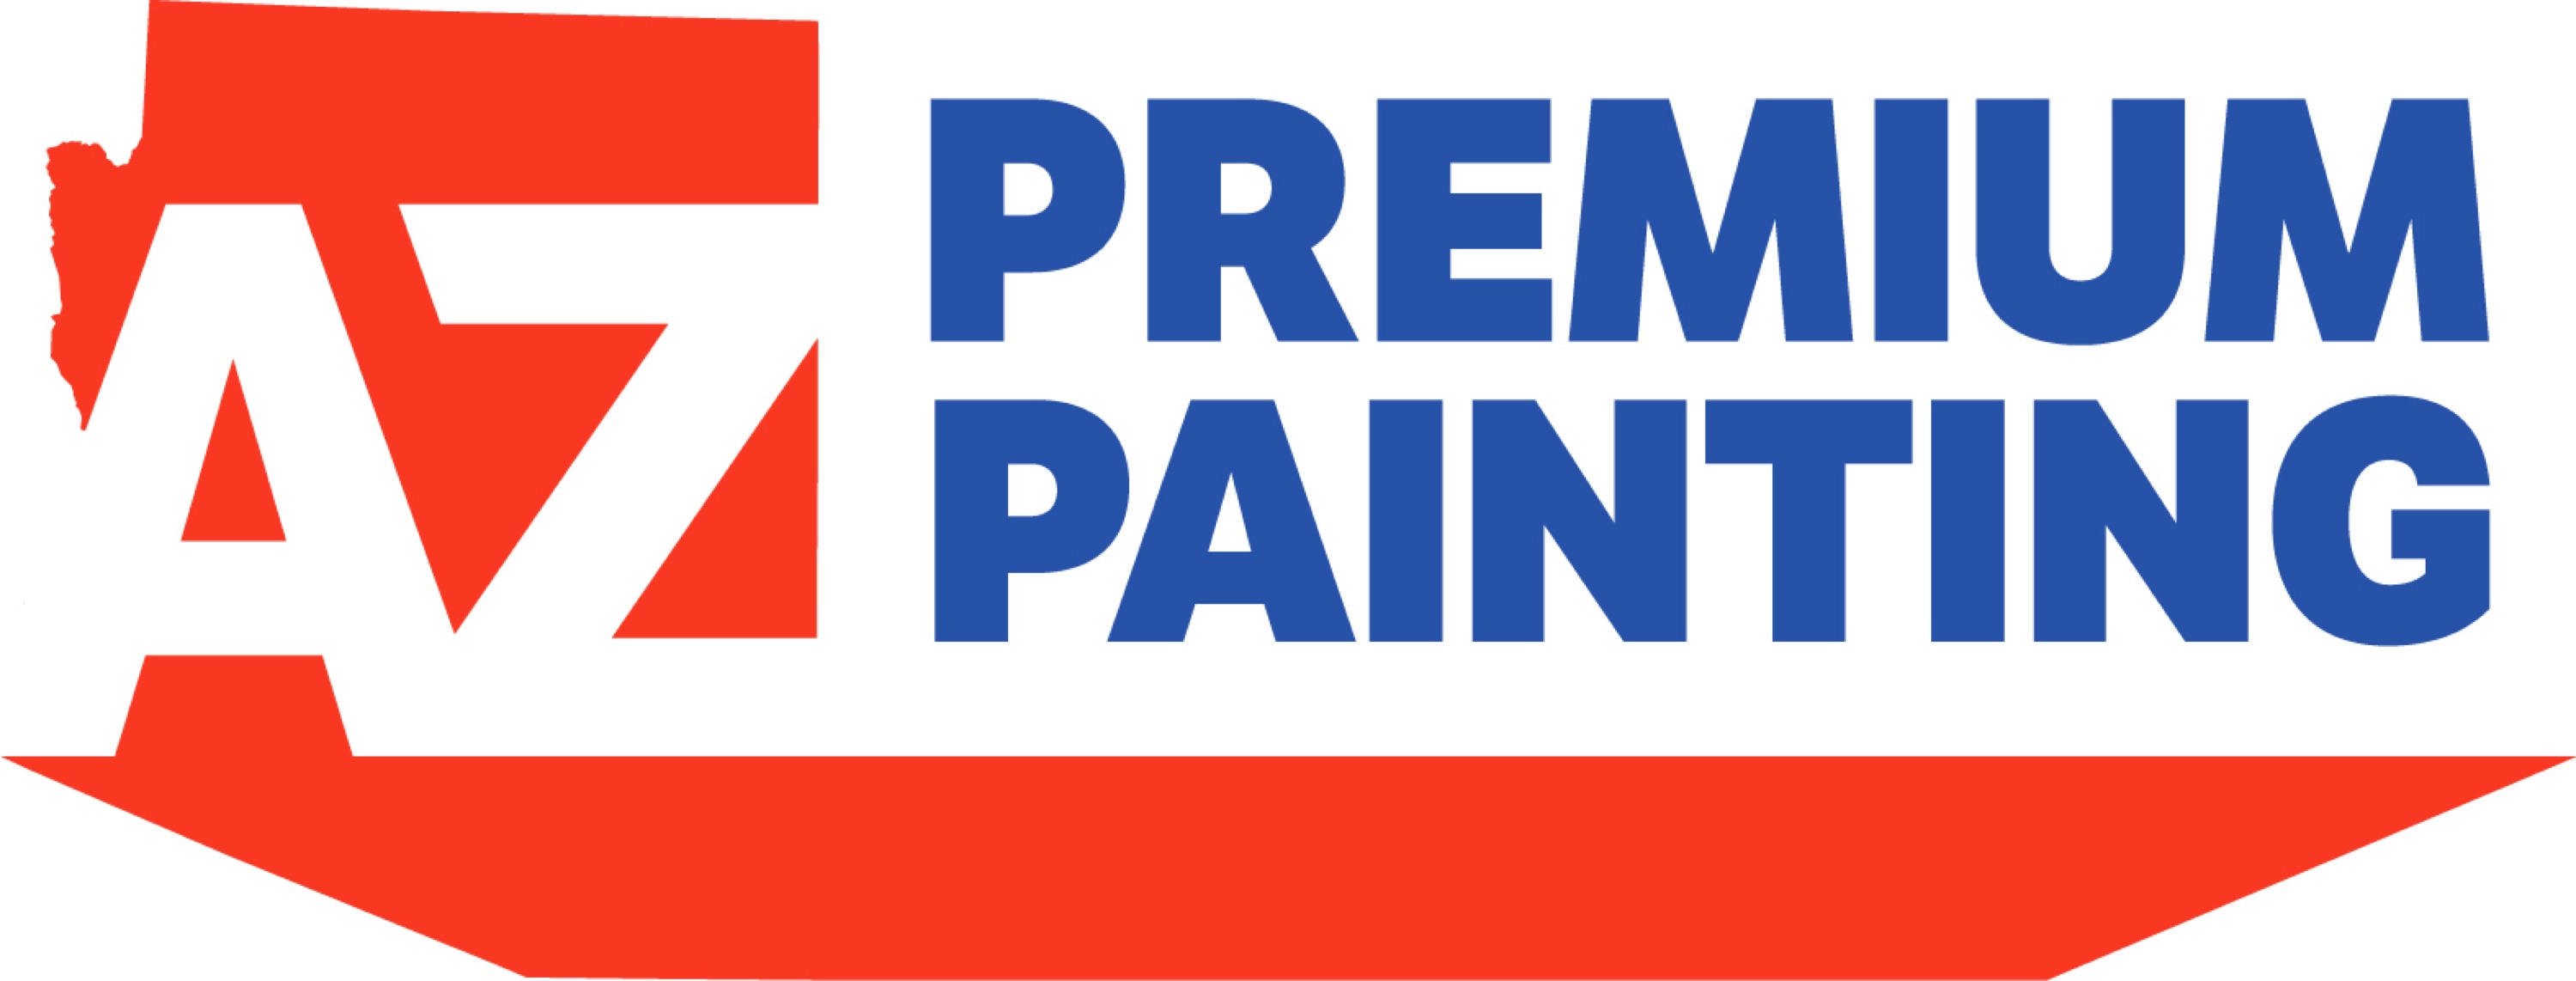 Arizona Premium Painting, LLC Logo